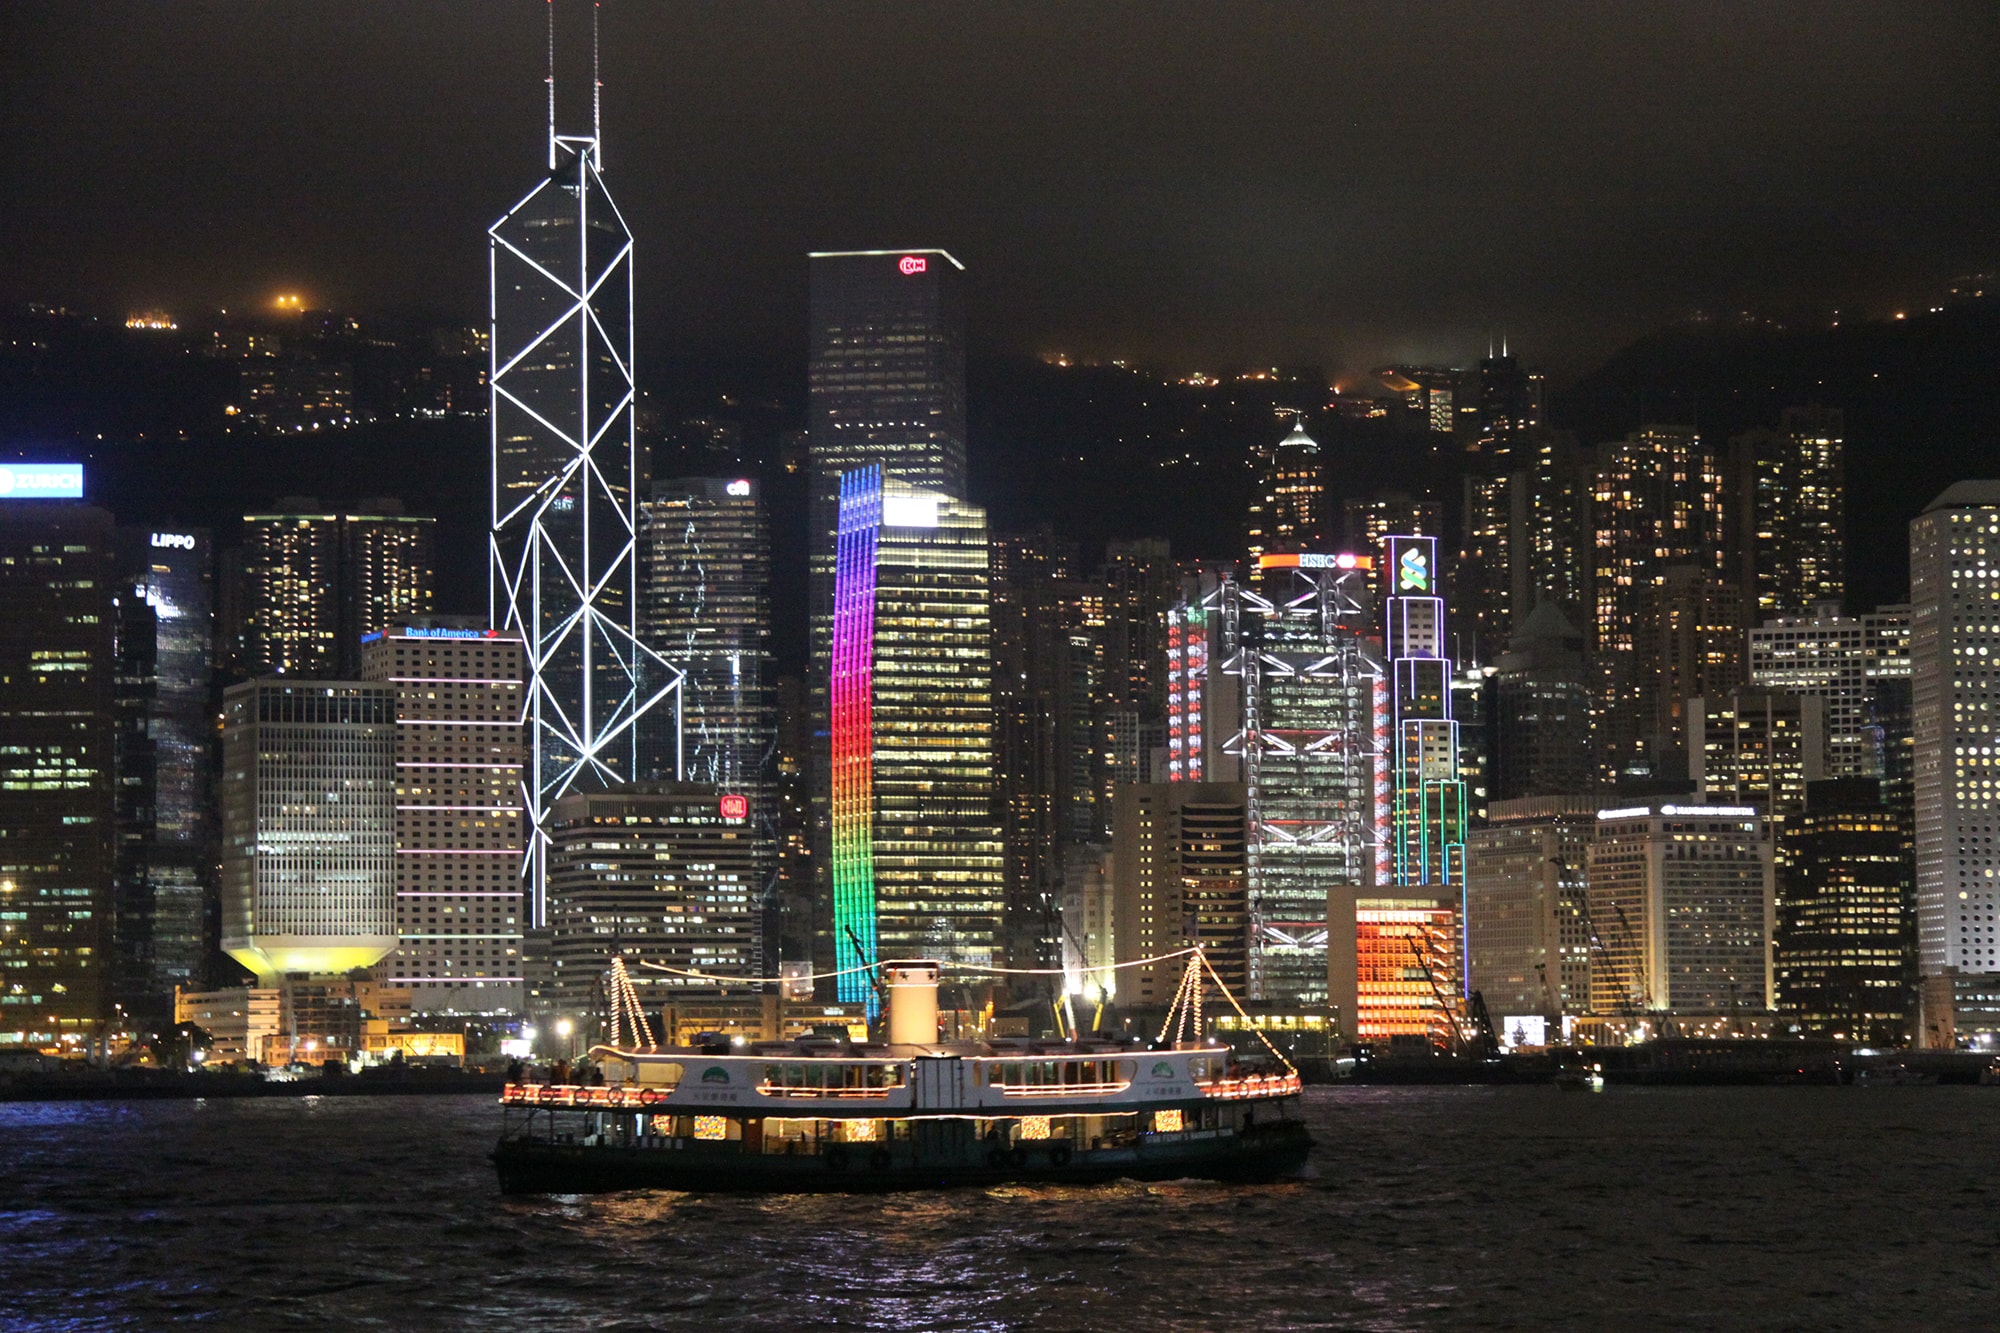 Hong Kong 184